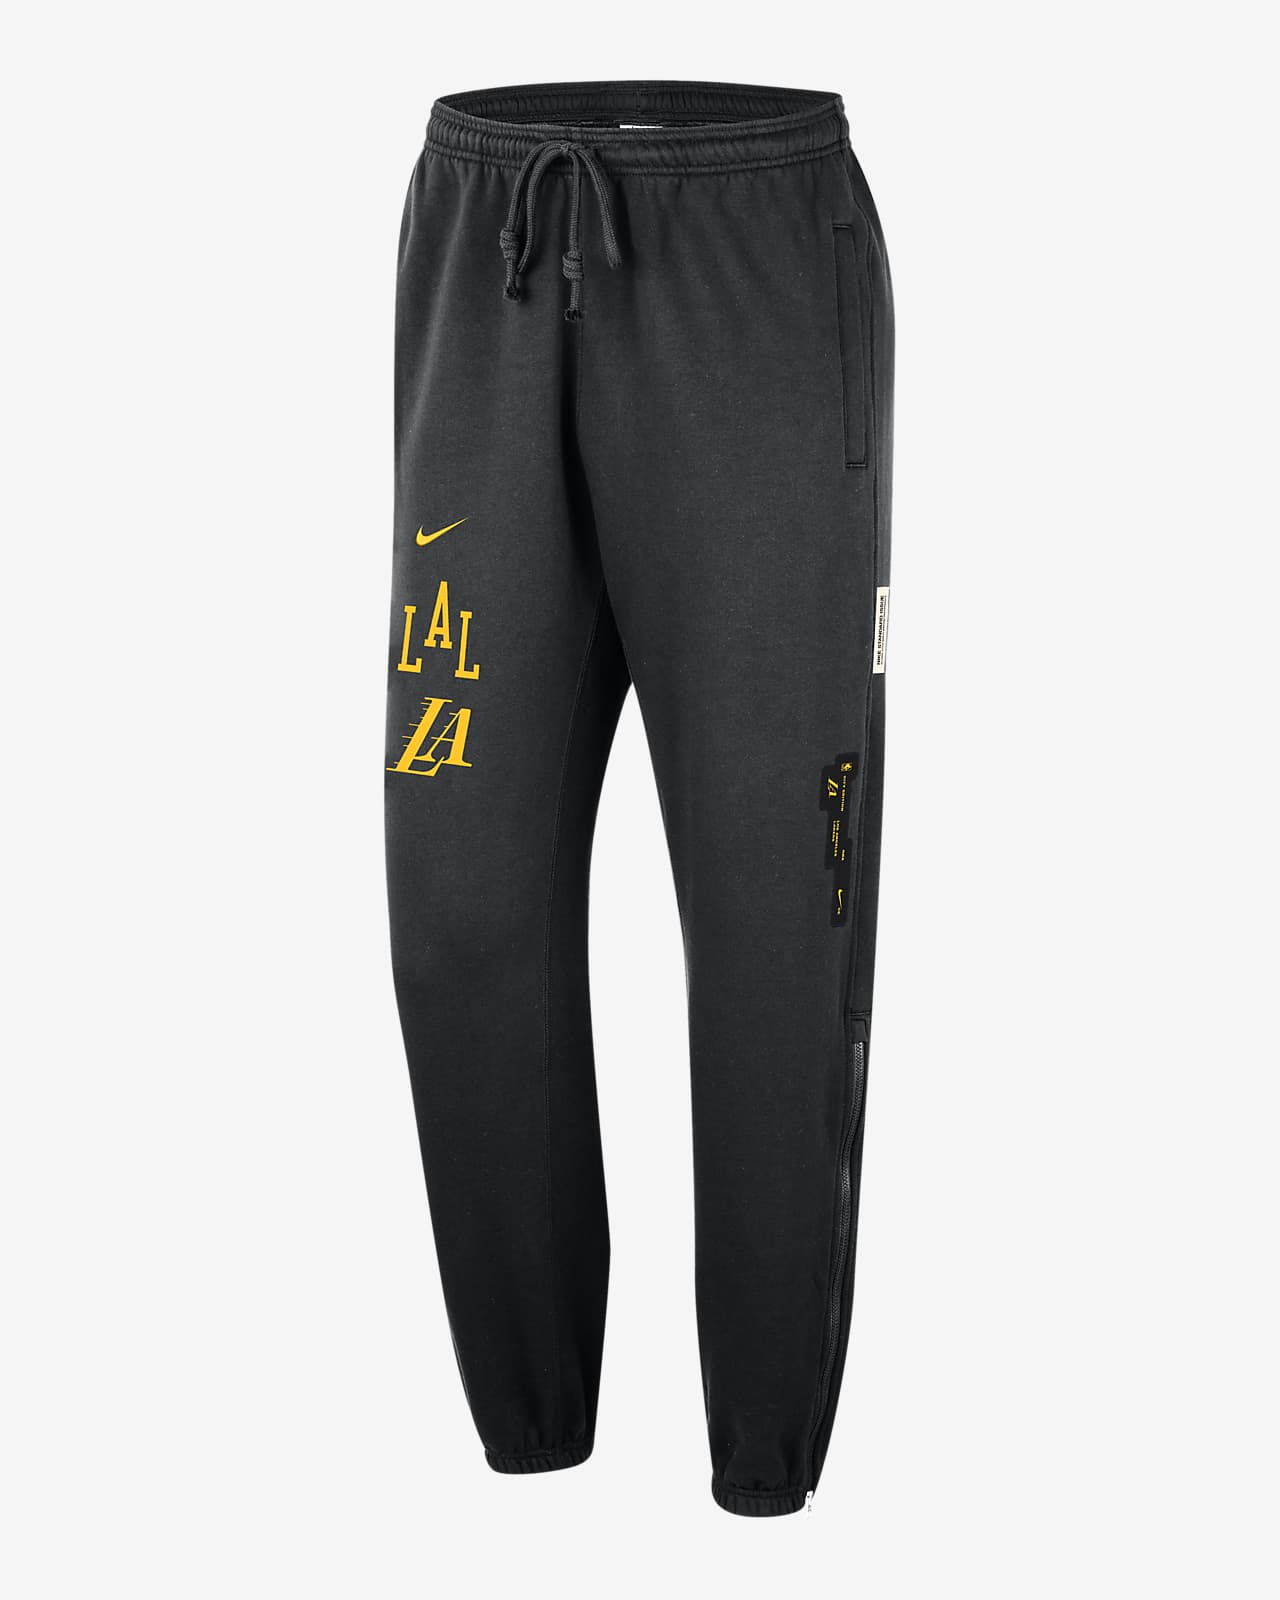 62 Nike Utah Jazz City Edition Game Warm-Up Tear Away Pants Sizes 3XLT, XL